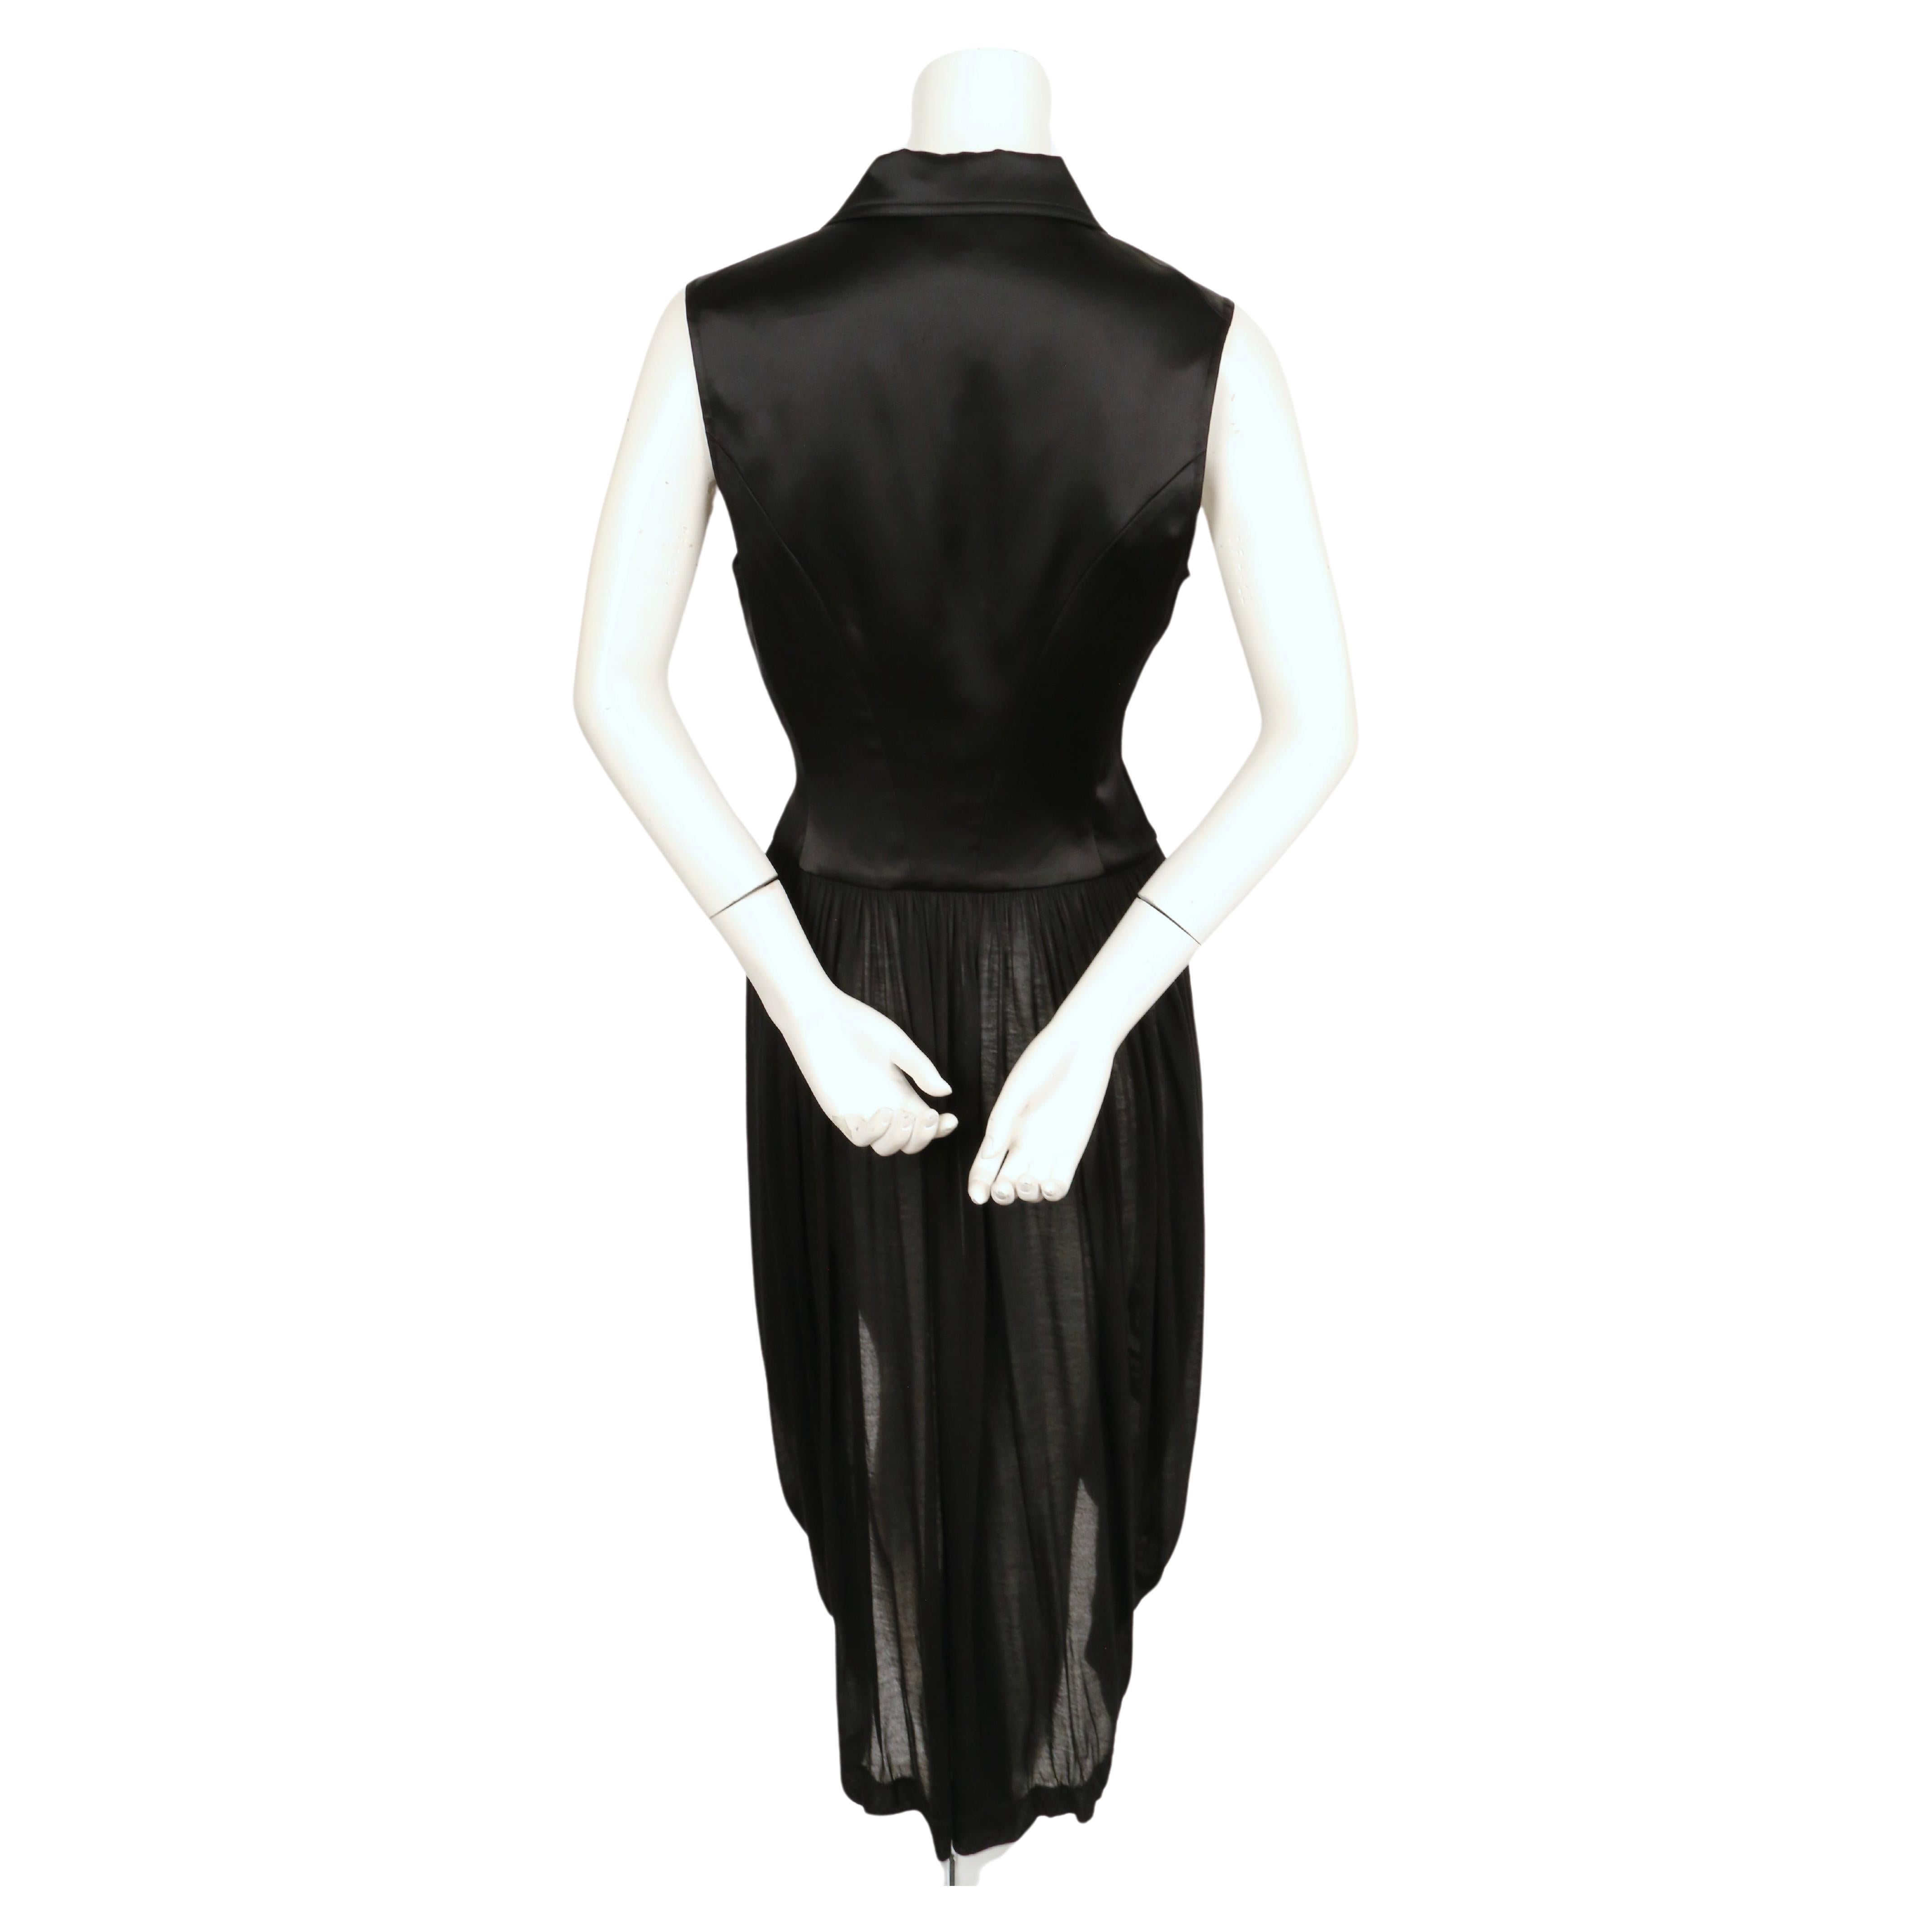 Y-3 YOHJI YAMAMOTO black satin dress with sheer skirt For Sale 2